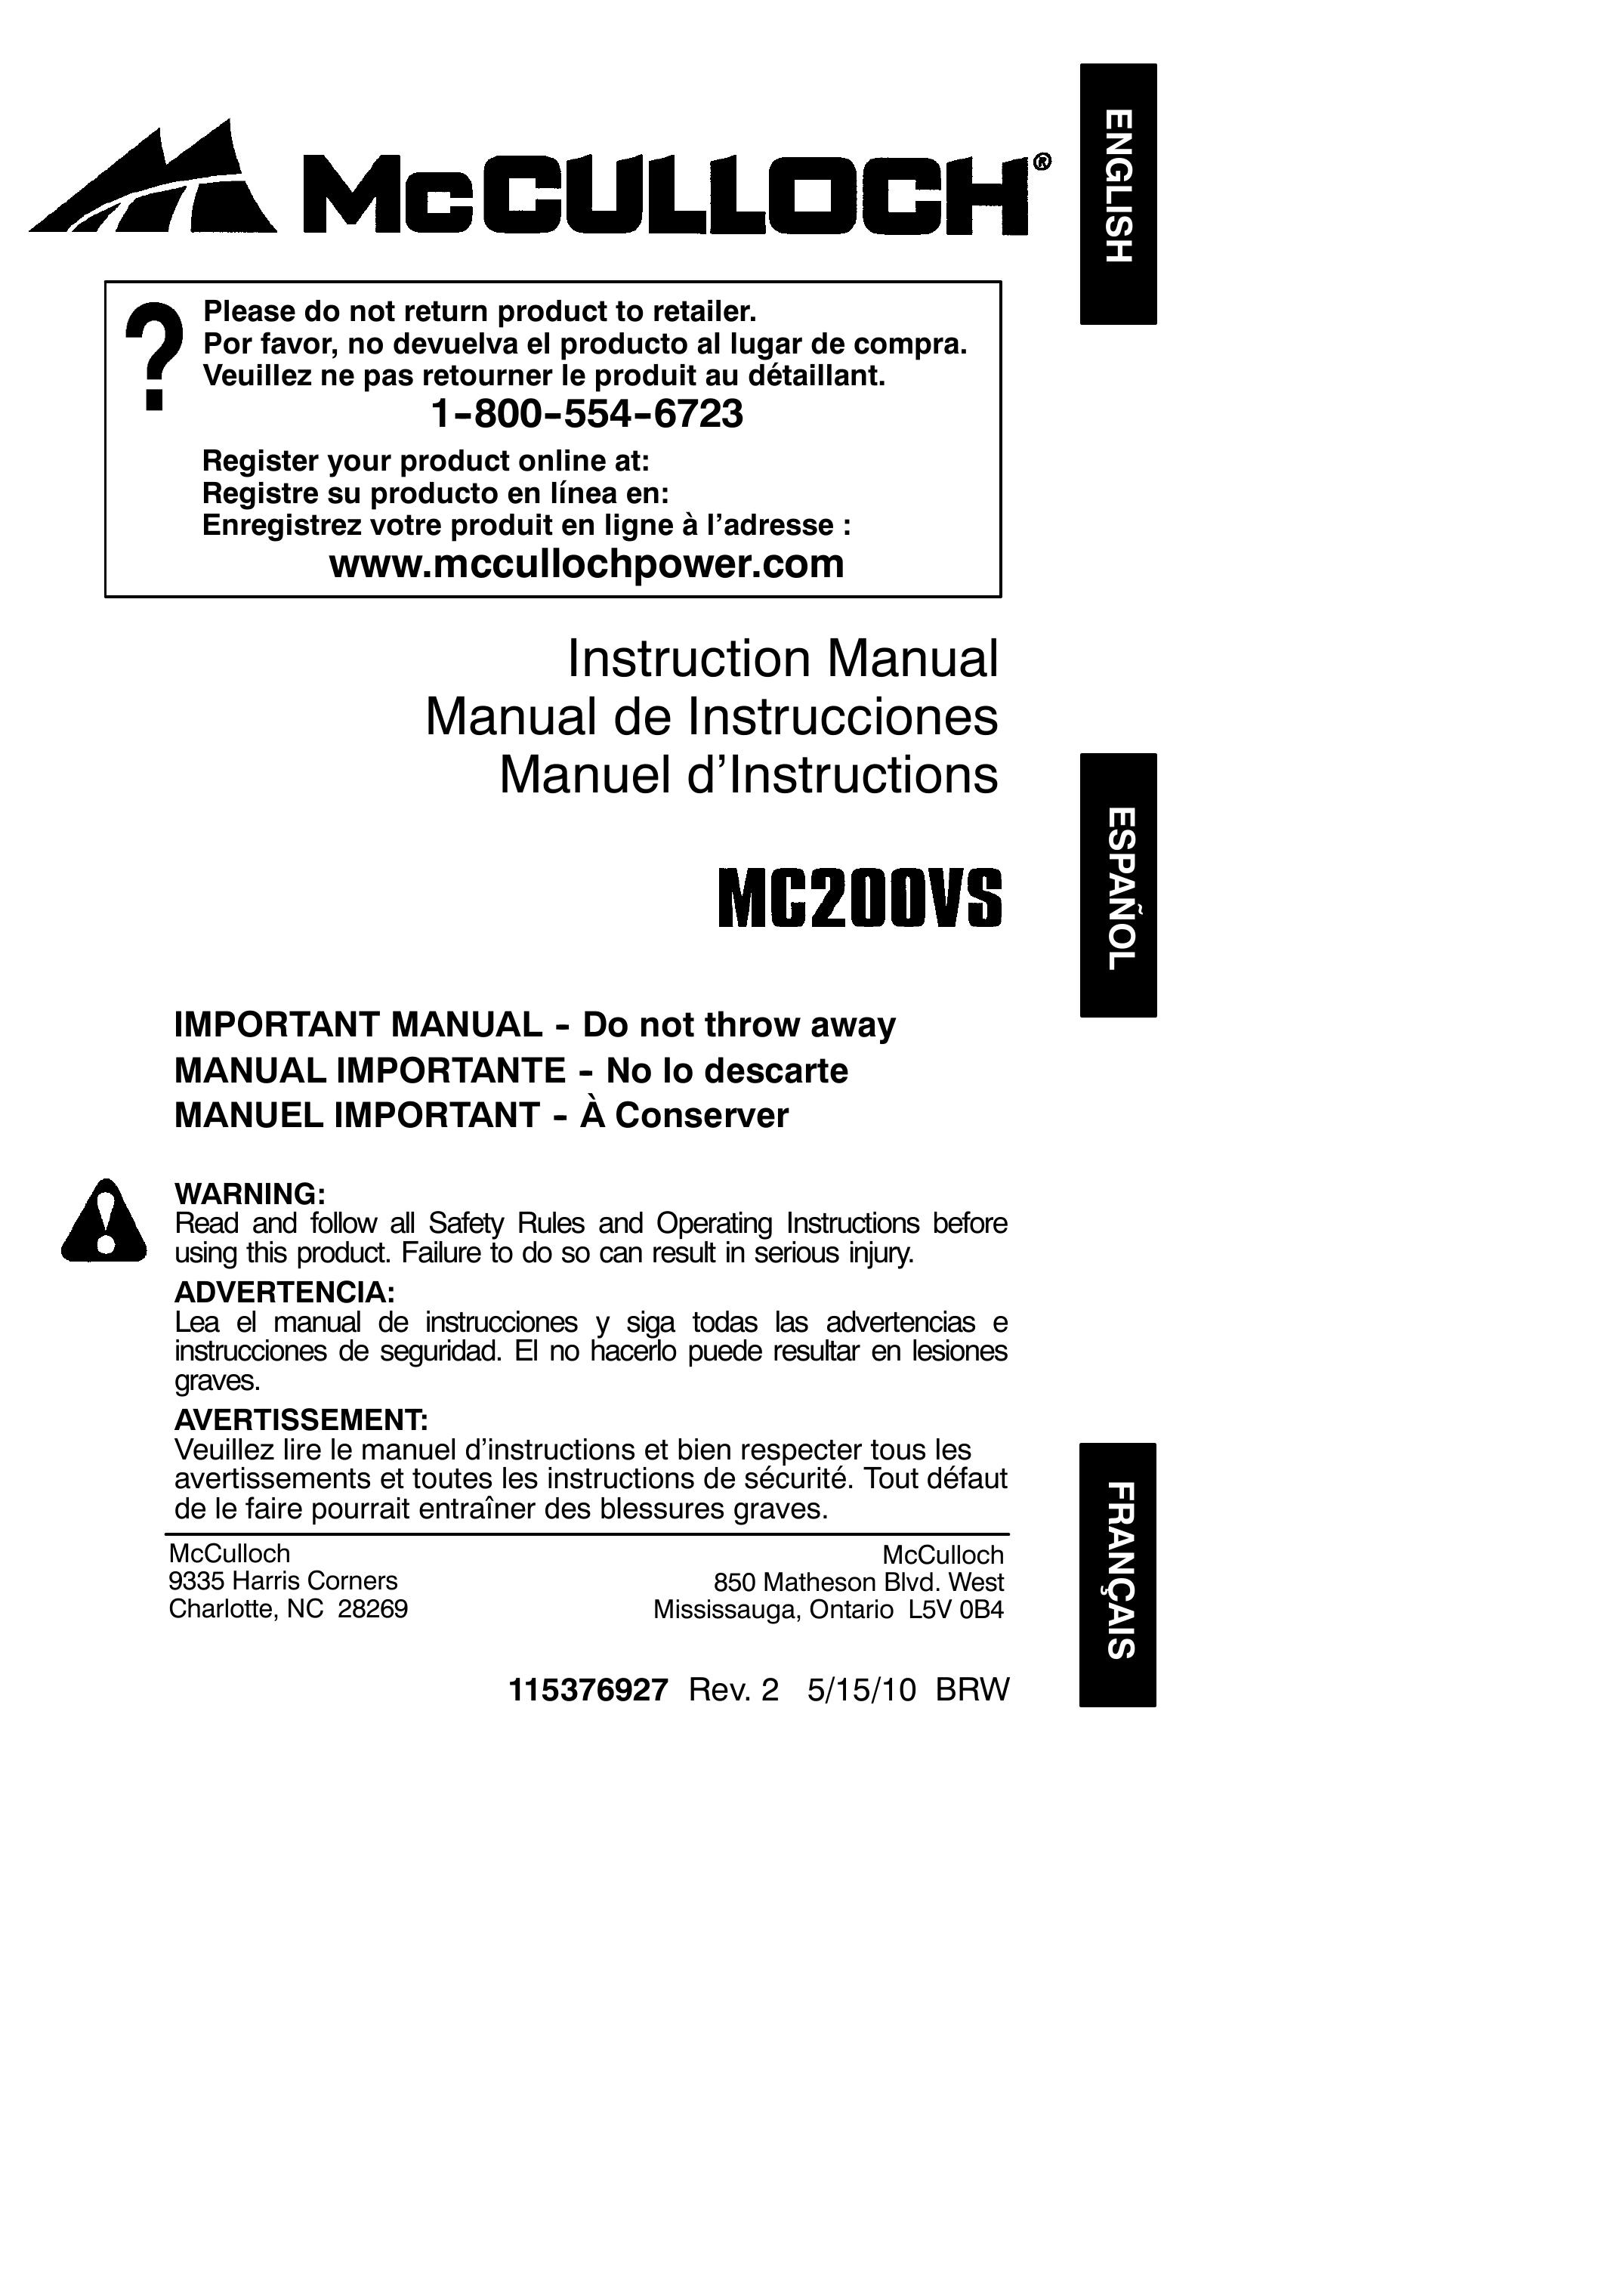 McCulloch 115376927 Blower User Manual